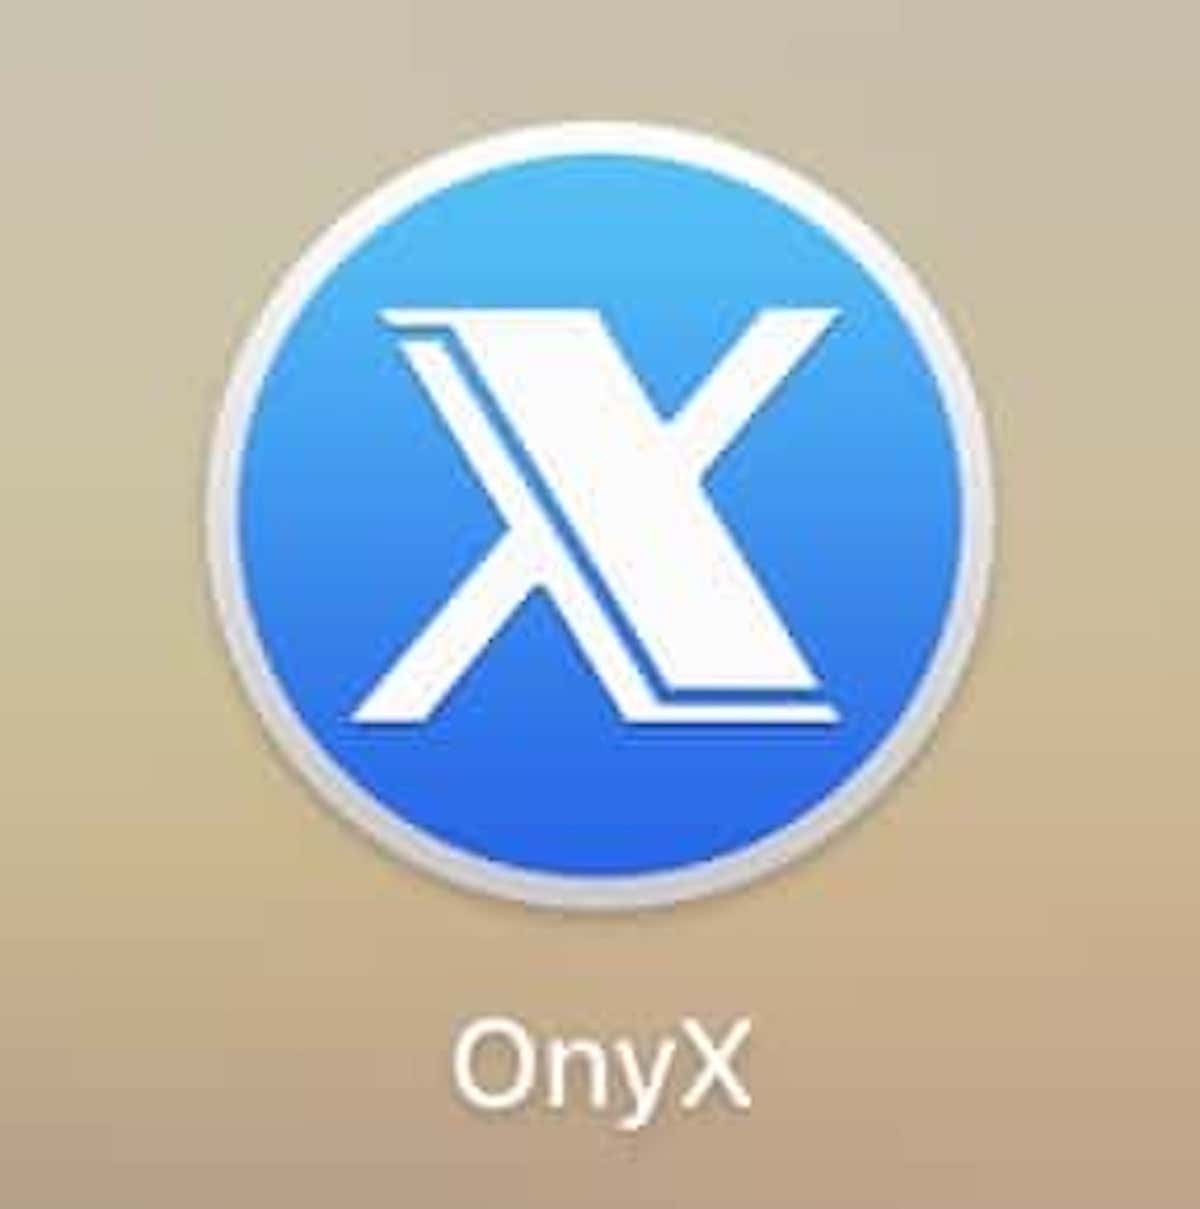 telecharger onyx mac